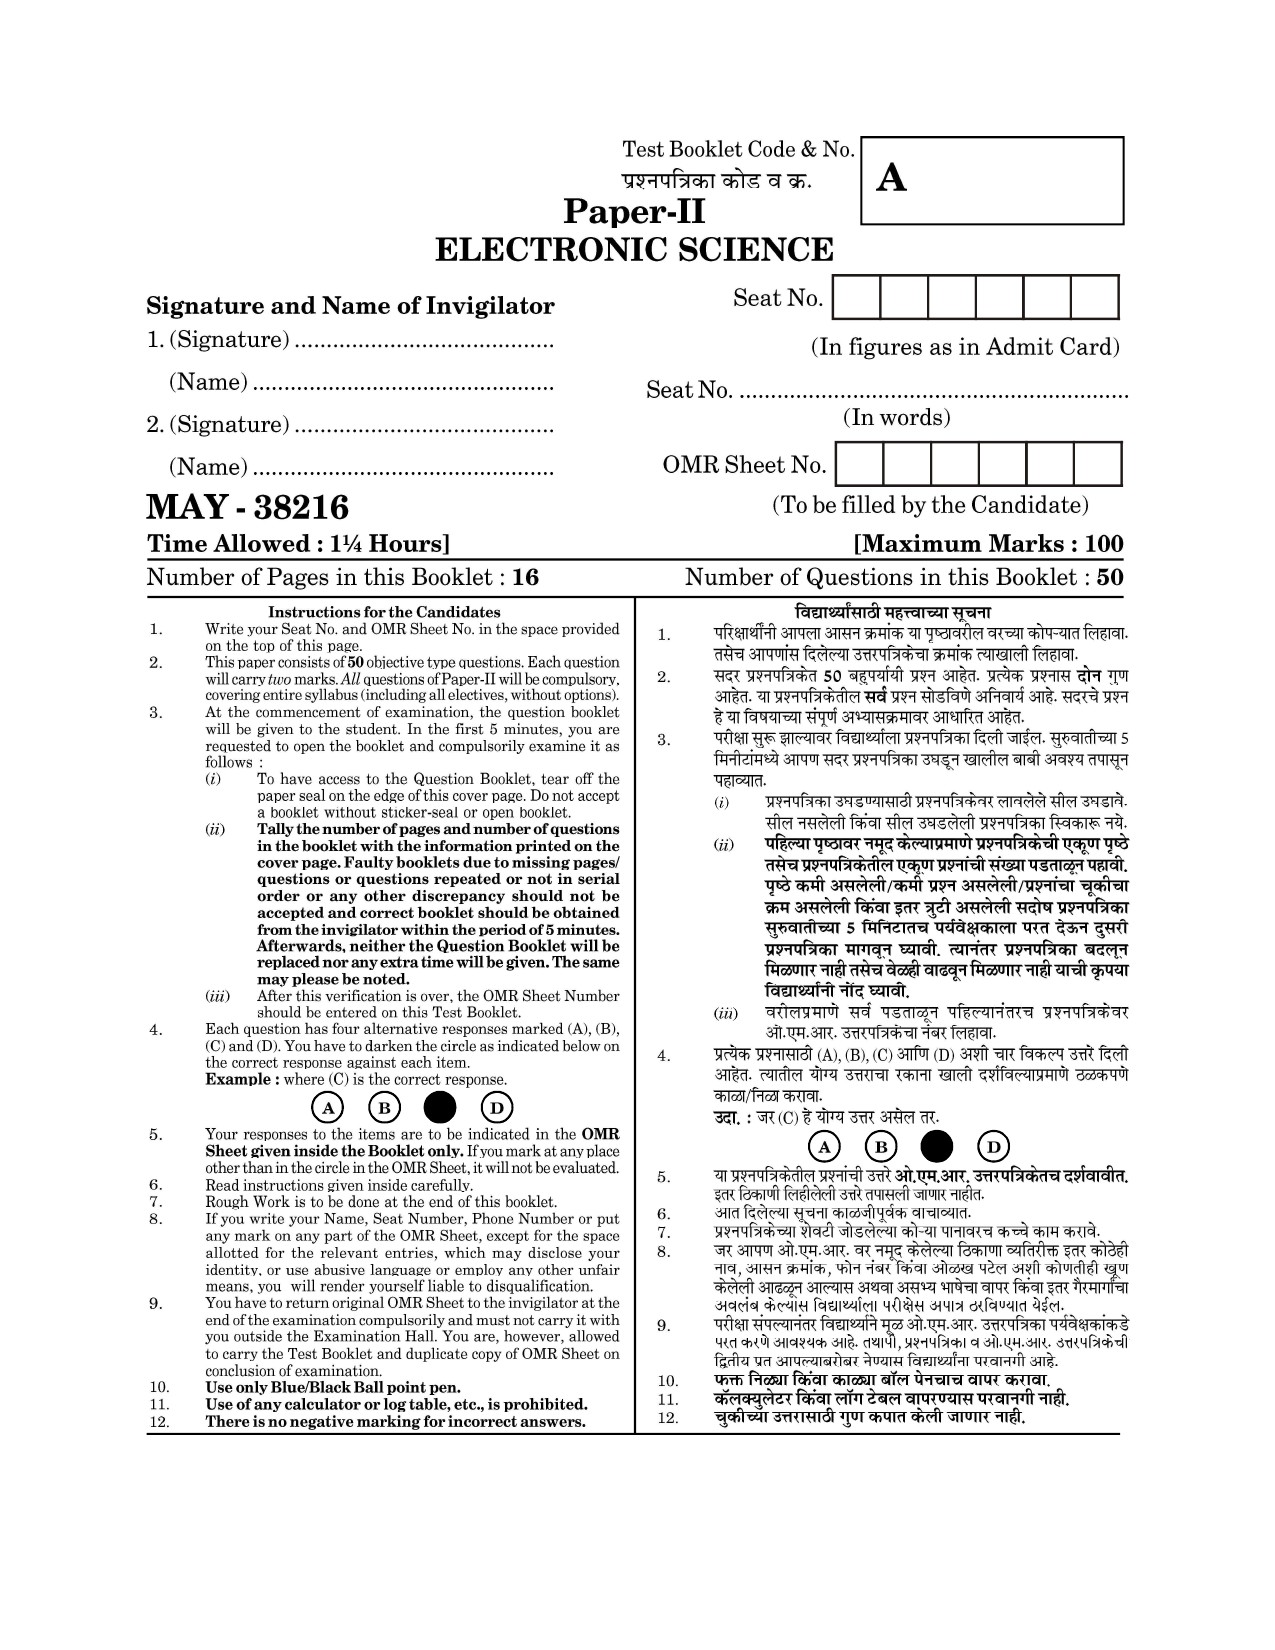 Maharashtra SET Electronics Science Question Paper II May 2016 1